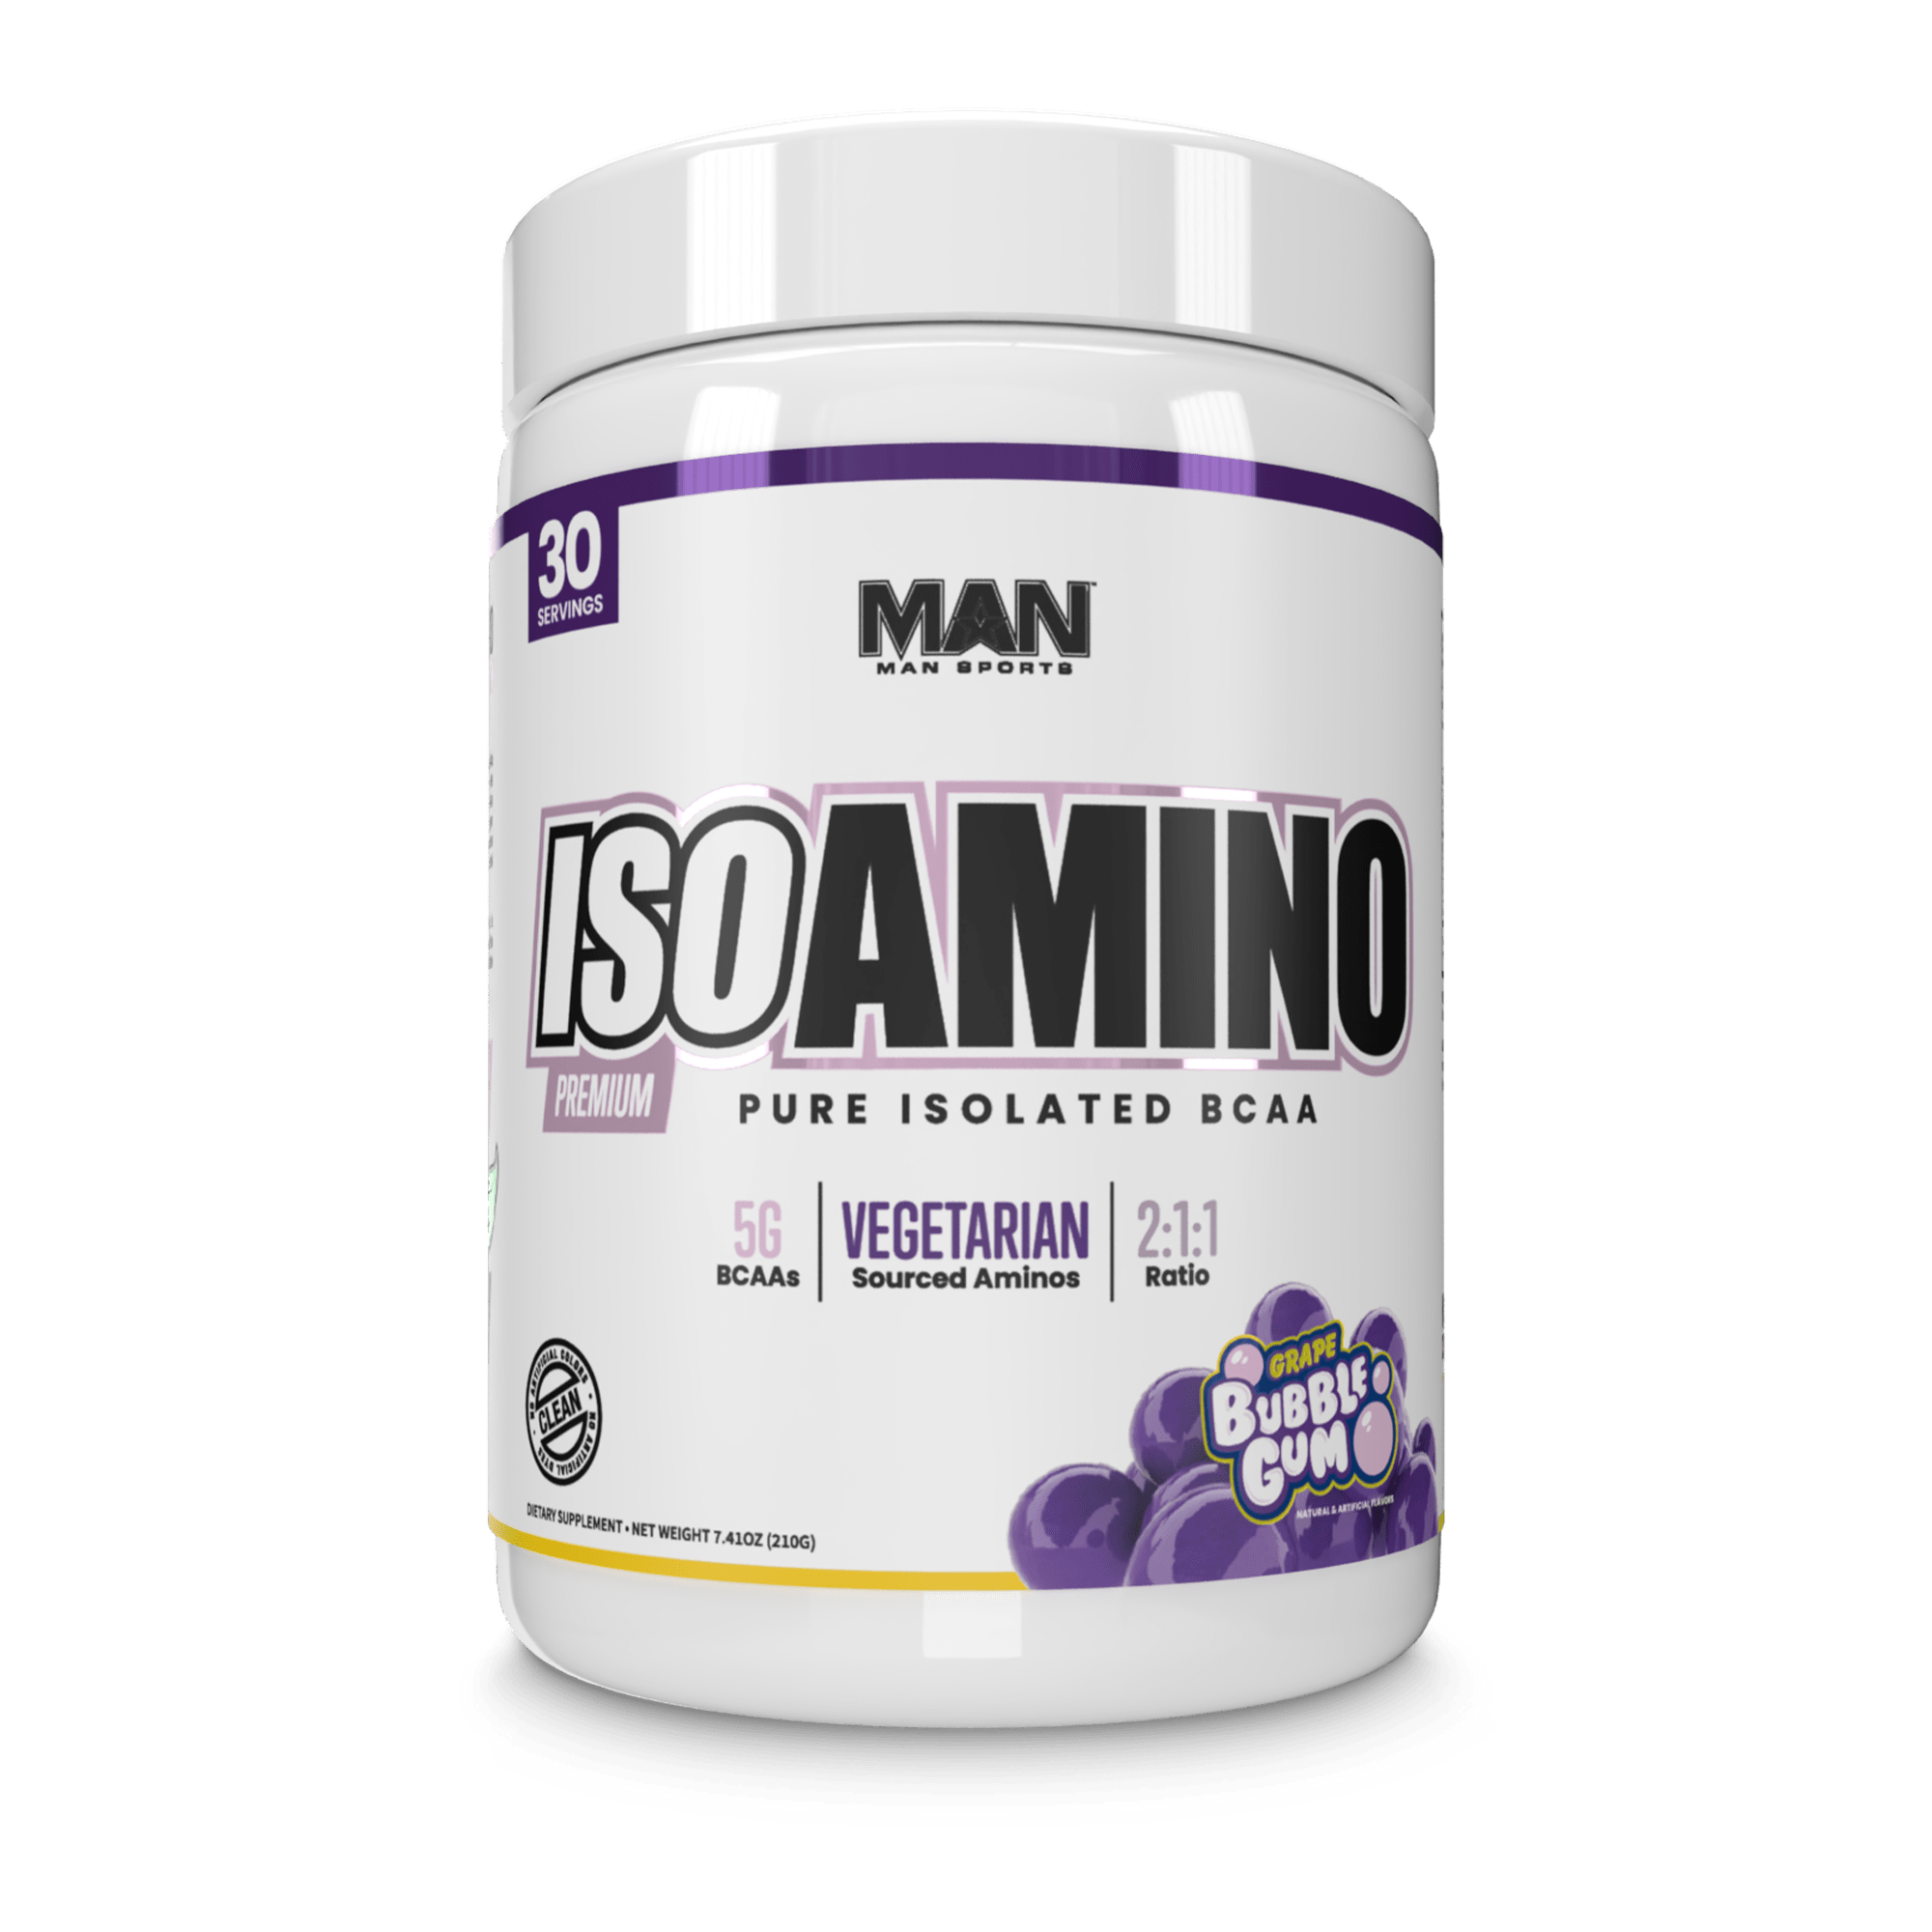 MAN SPORTS Single ISO-AMINO – 30 Servings